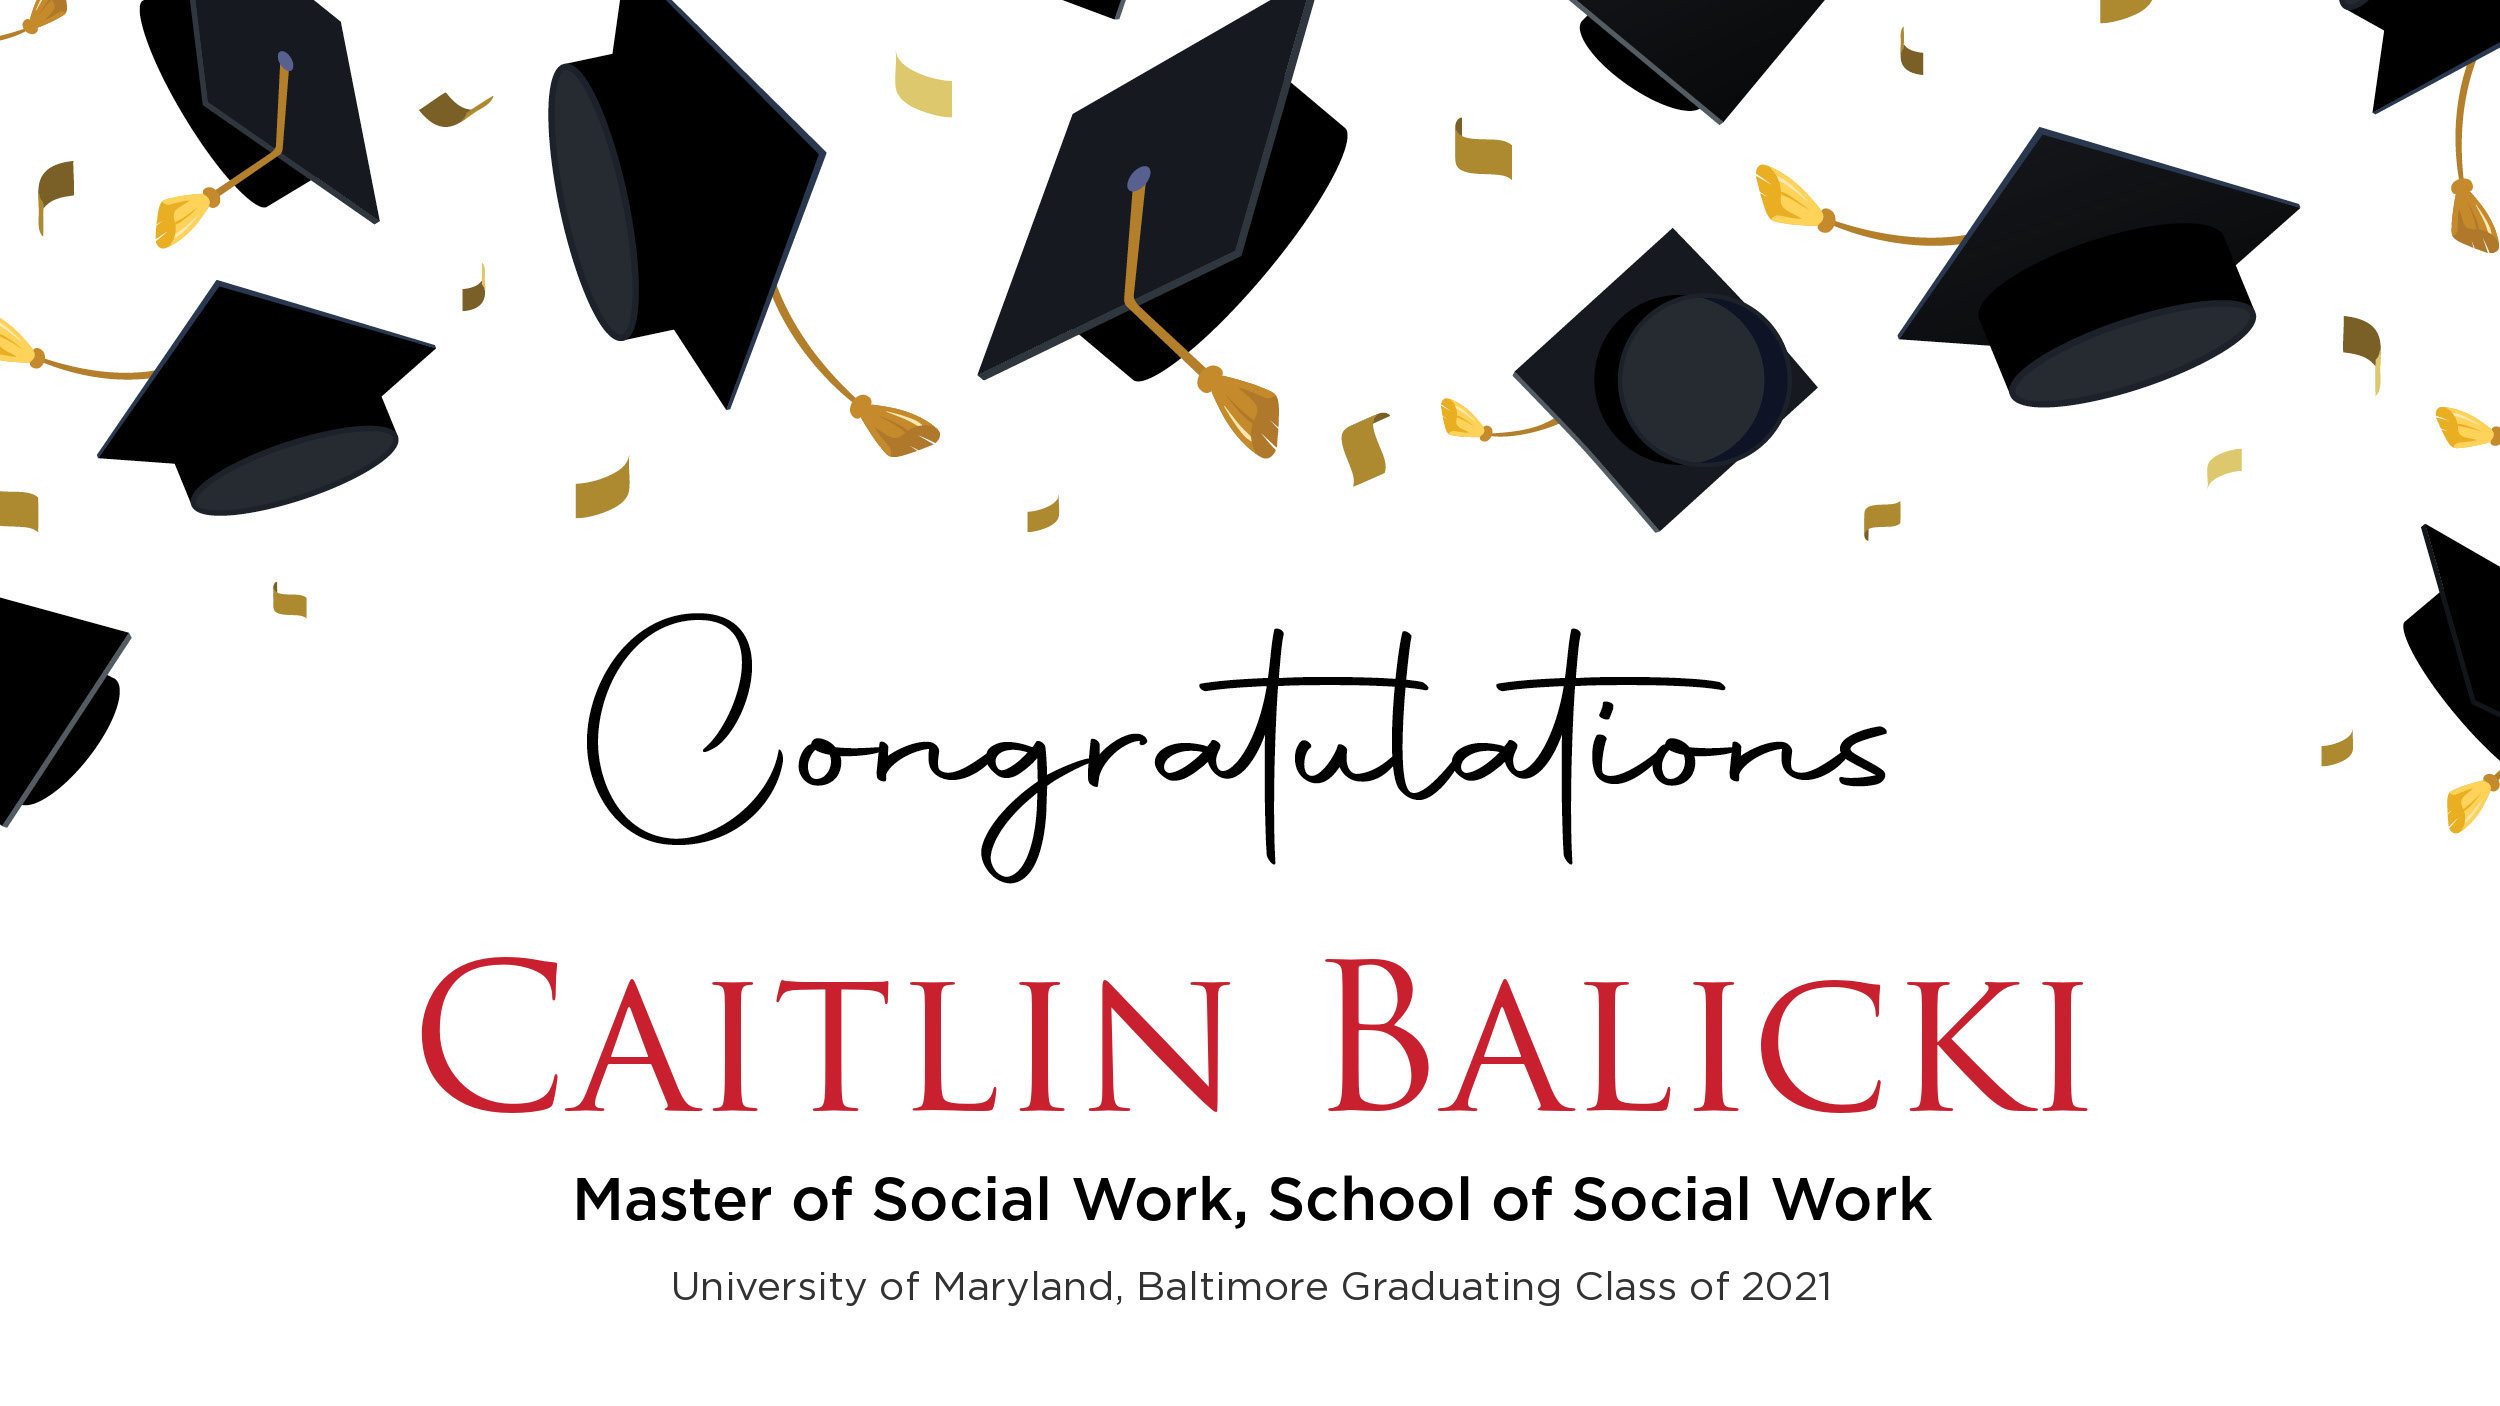 Congratulations Caitlin Balicki, Master of Social Work